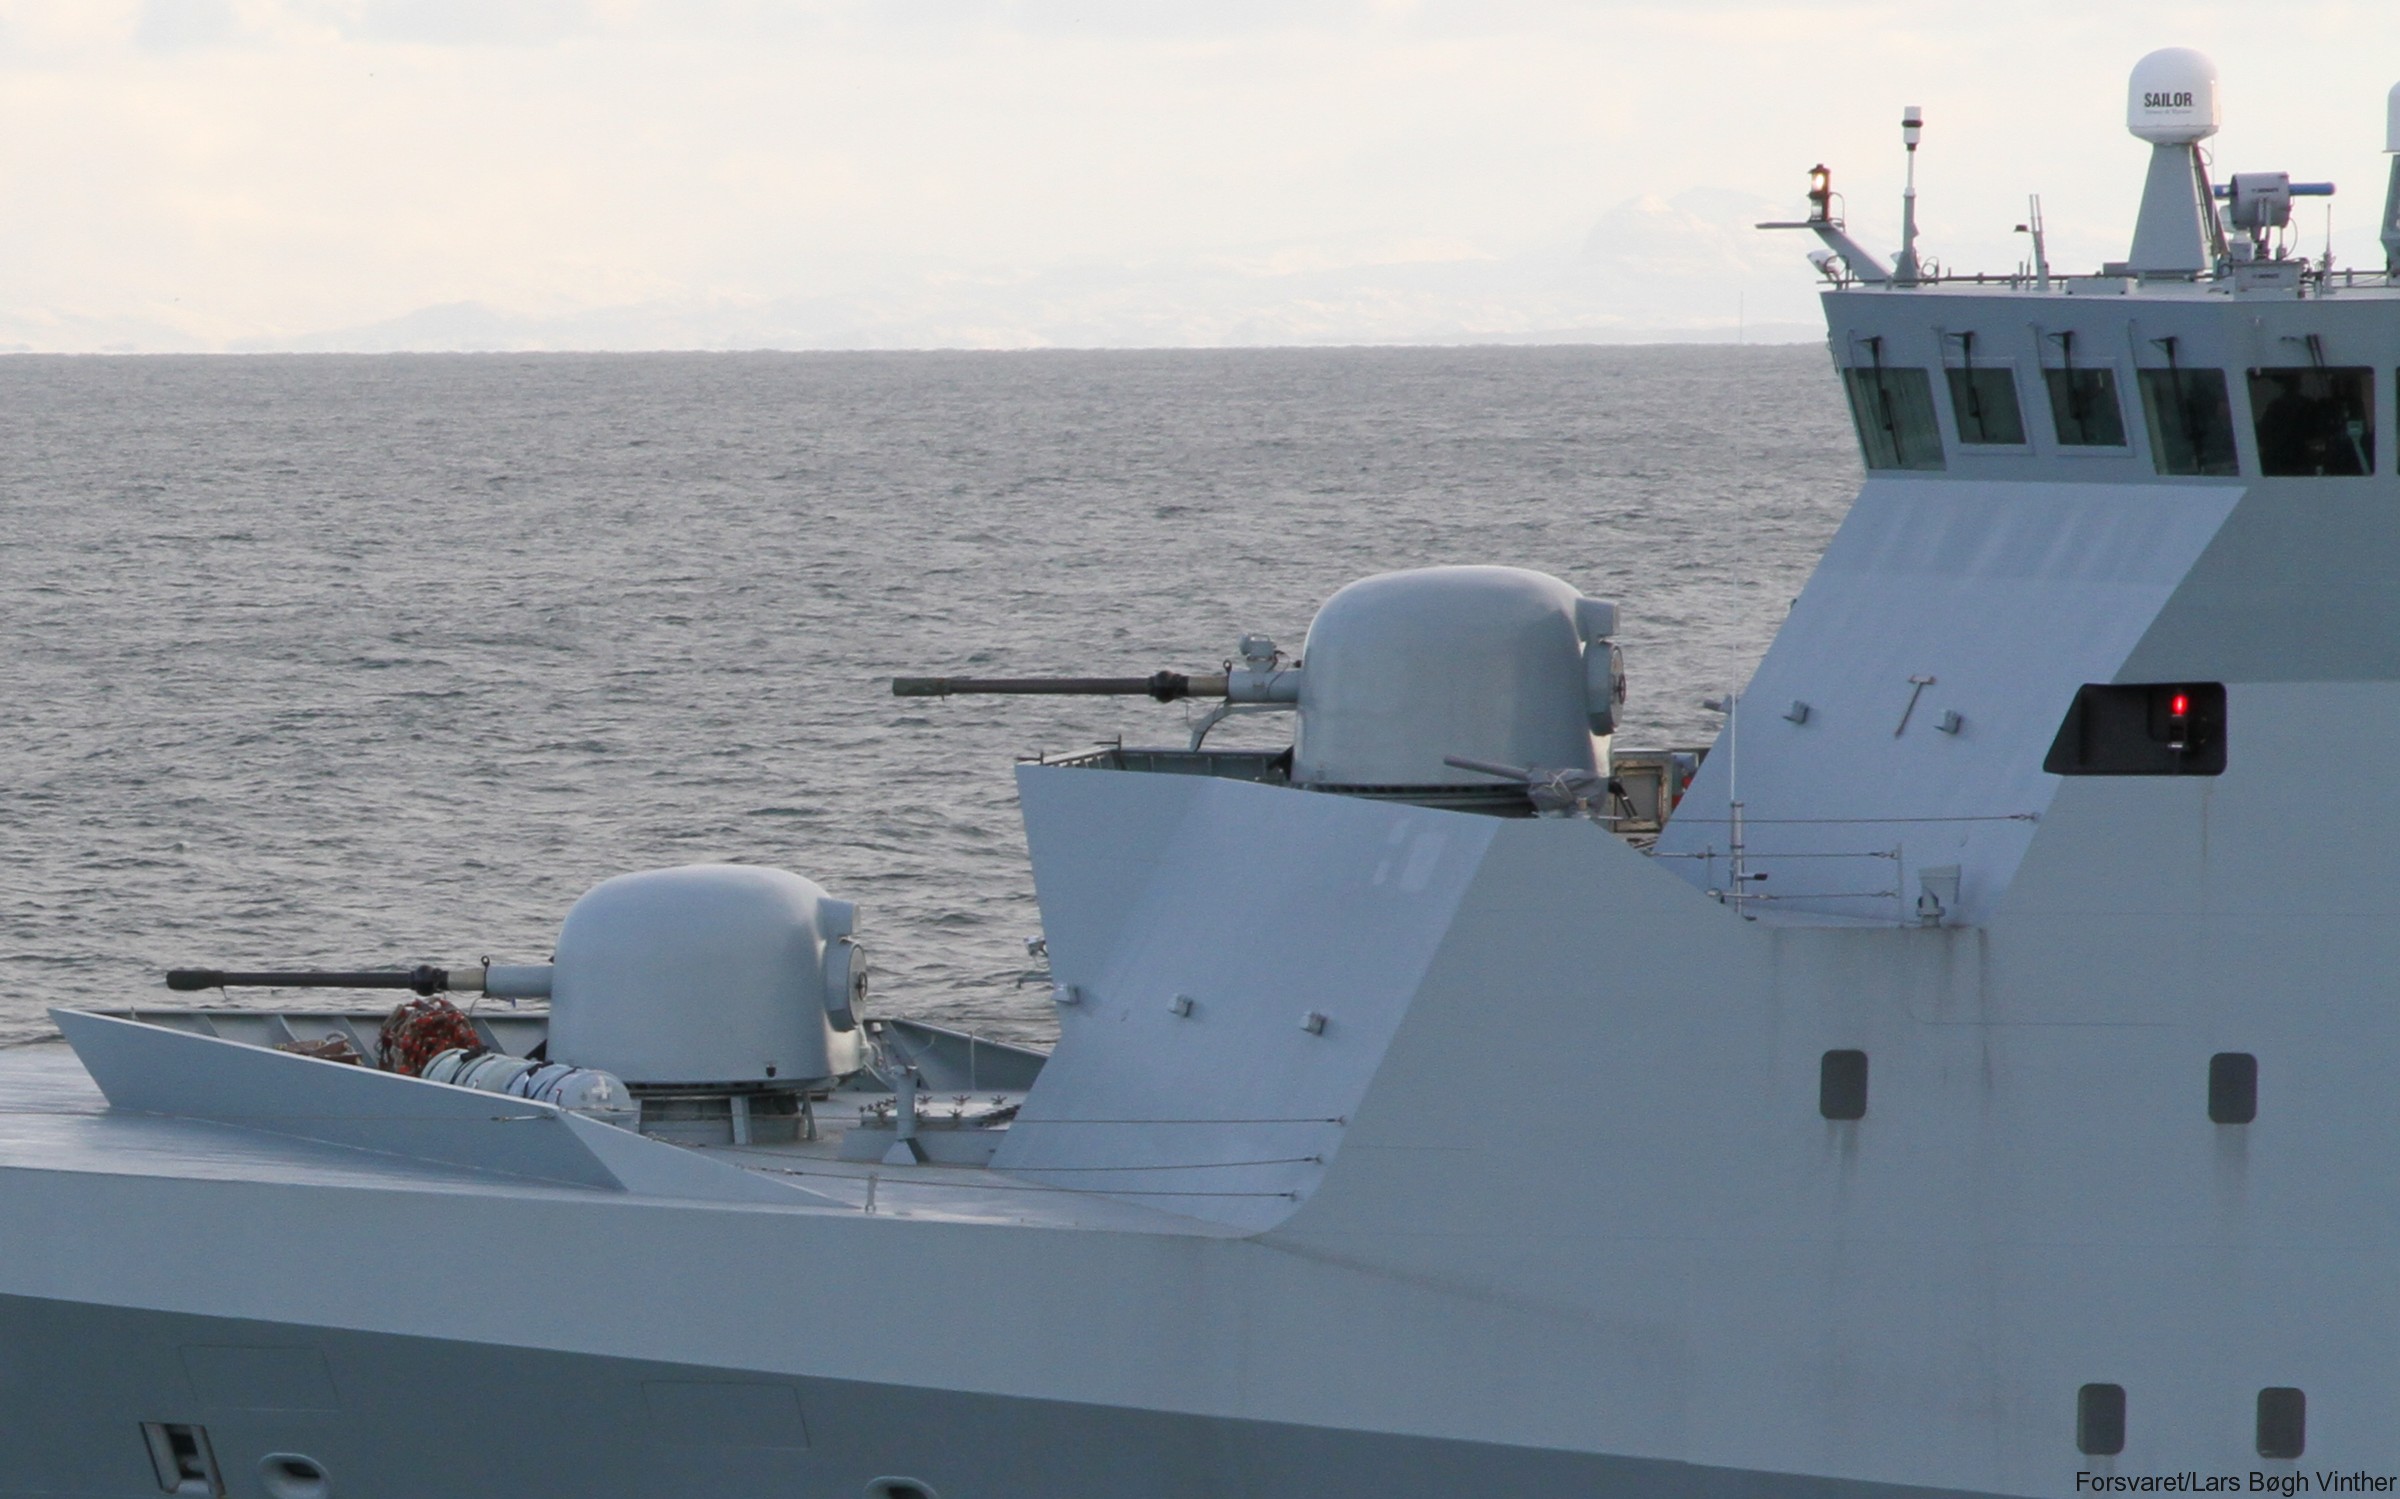 iver huitfeldt class guided missile frigate royal danish navy 45x oto melara 76/62 gun